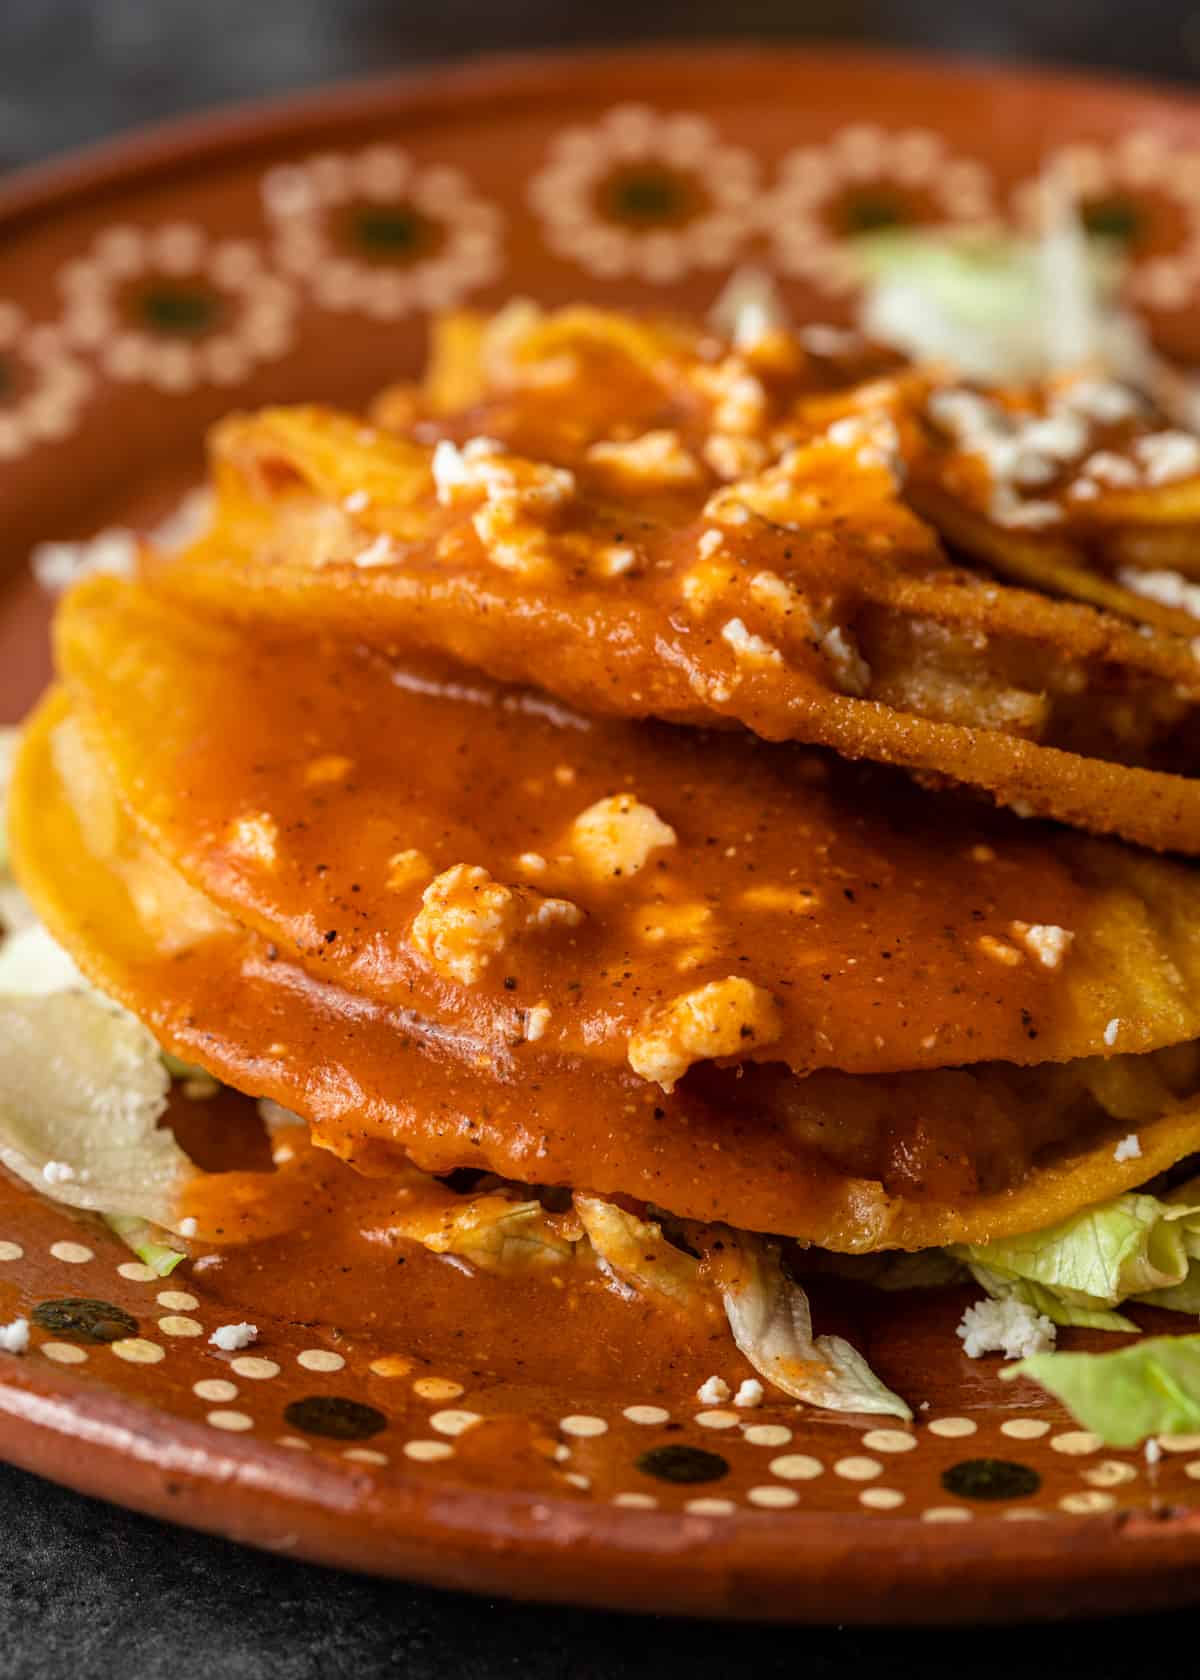 extreme closeup: potato taco recipe covered in sauce on a ceramic plate